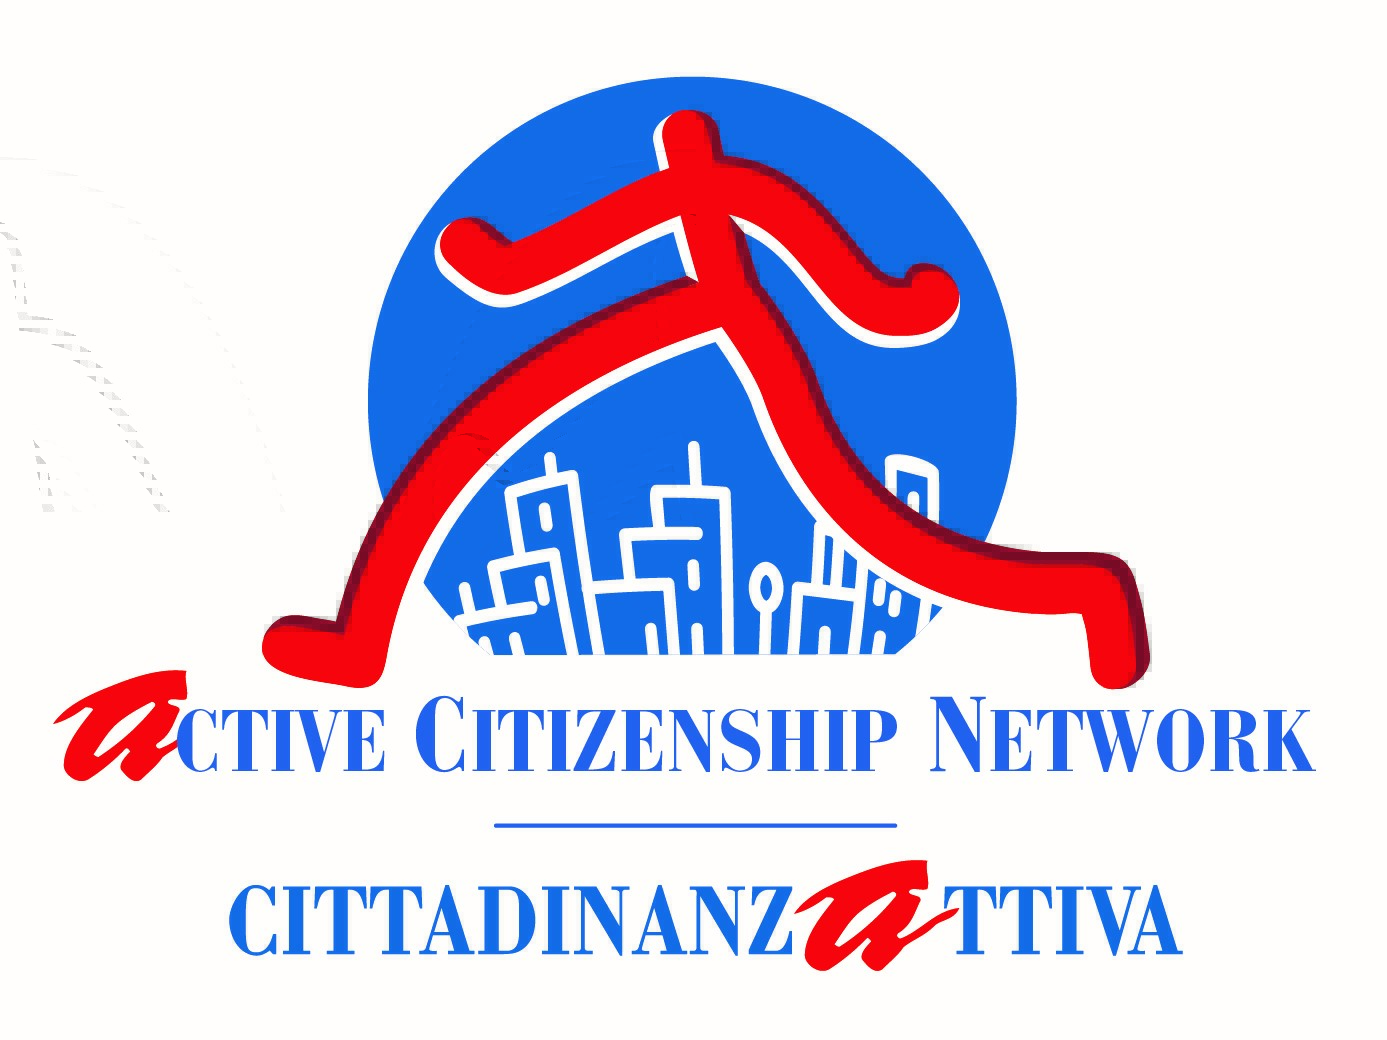 Active Citizenship Network